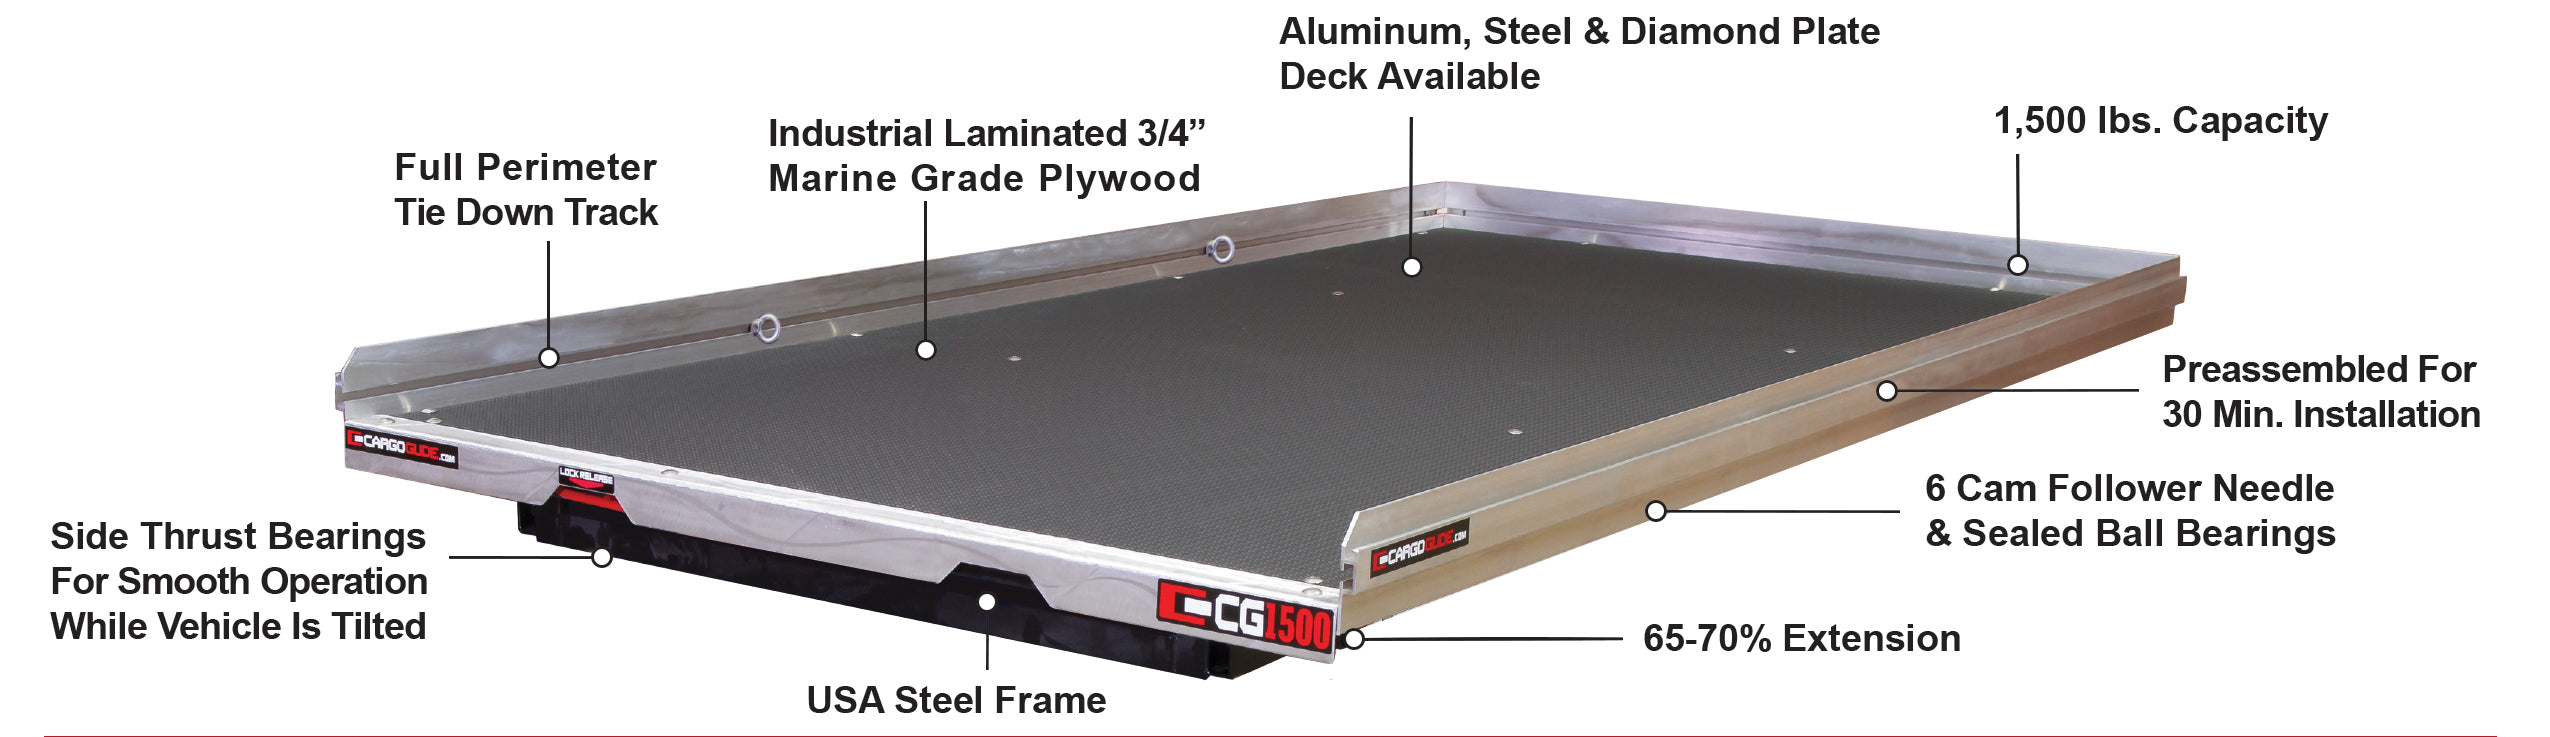 CargoGlide CG1500 Sliding Truck Bed Tray - 1500 lb Capacity